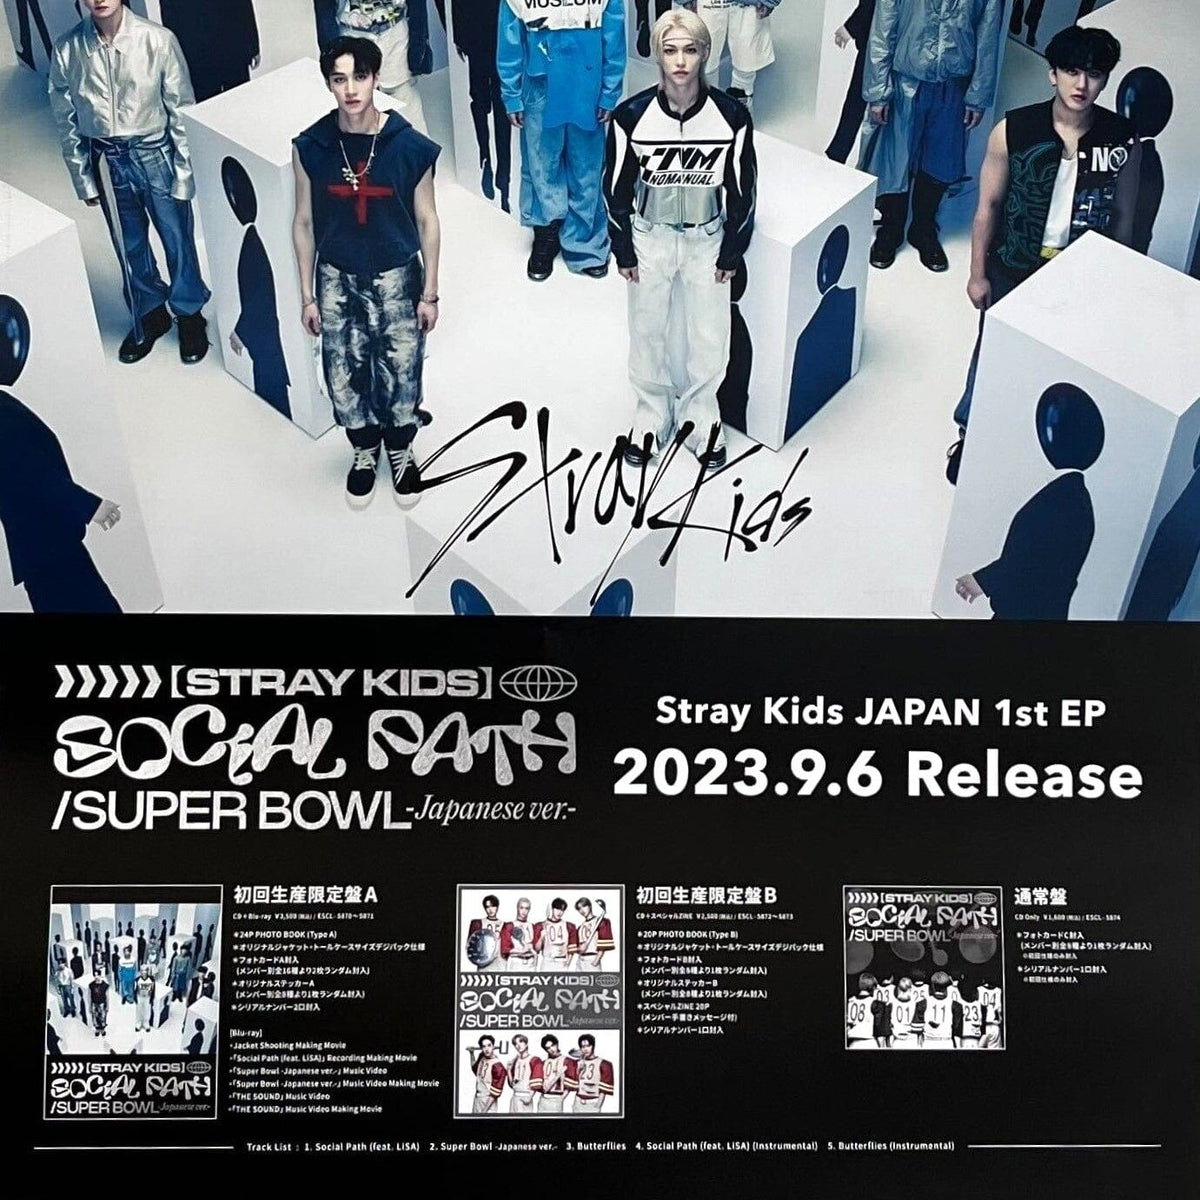 JP] Stray Kids - Social Path / Super Bowl JAPAN 1ST EP ALBUM 